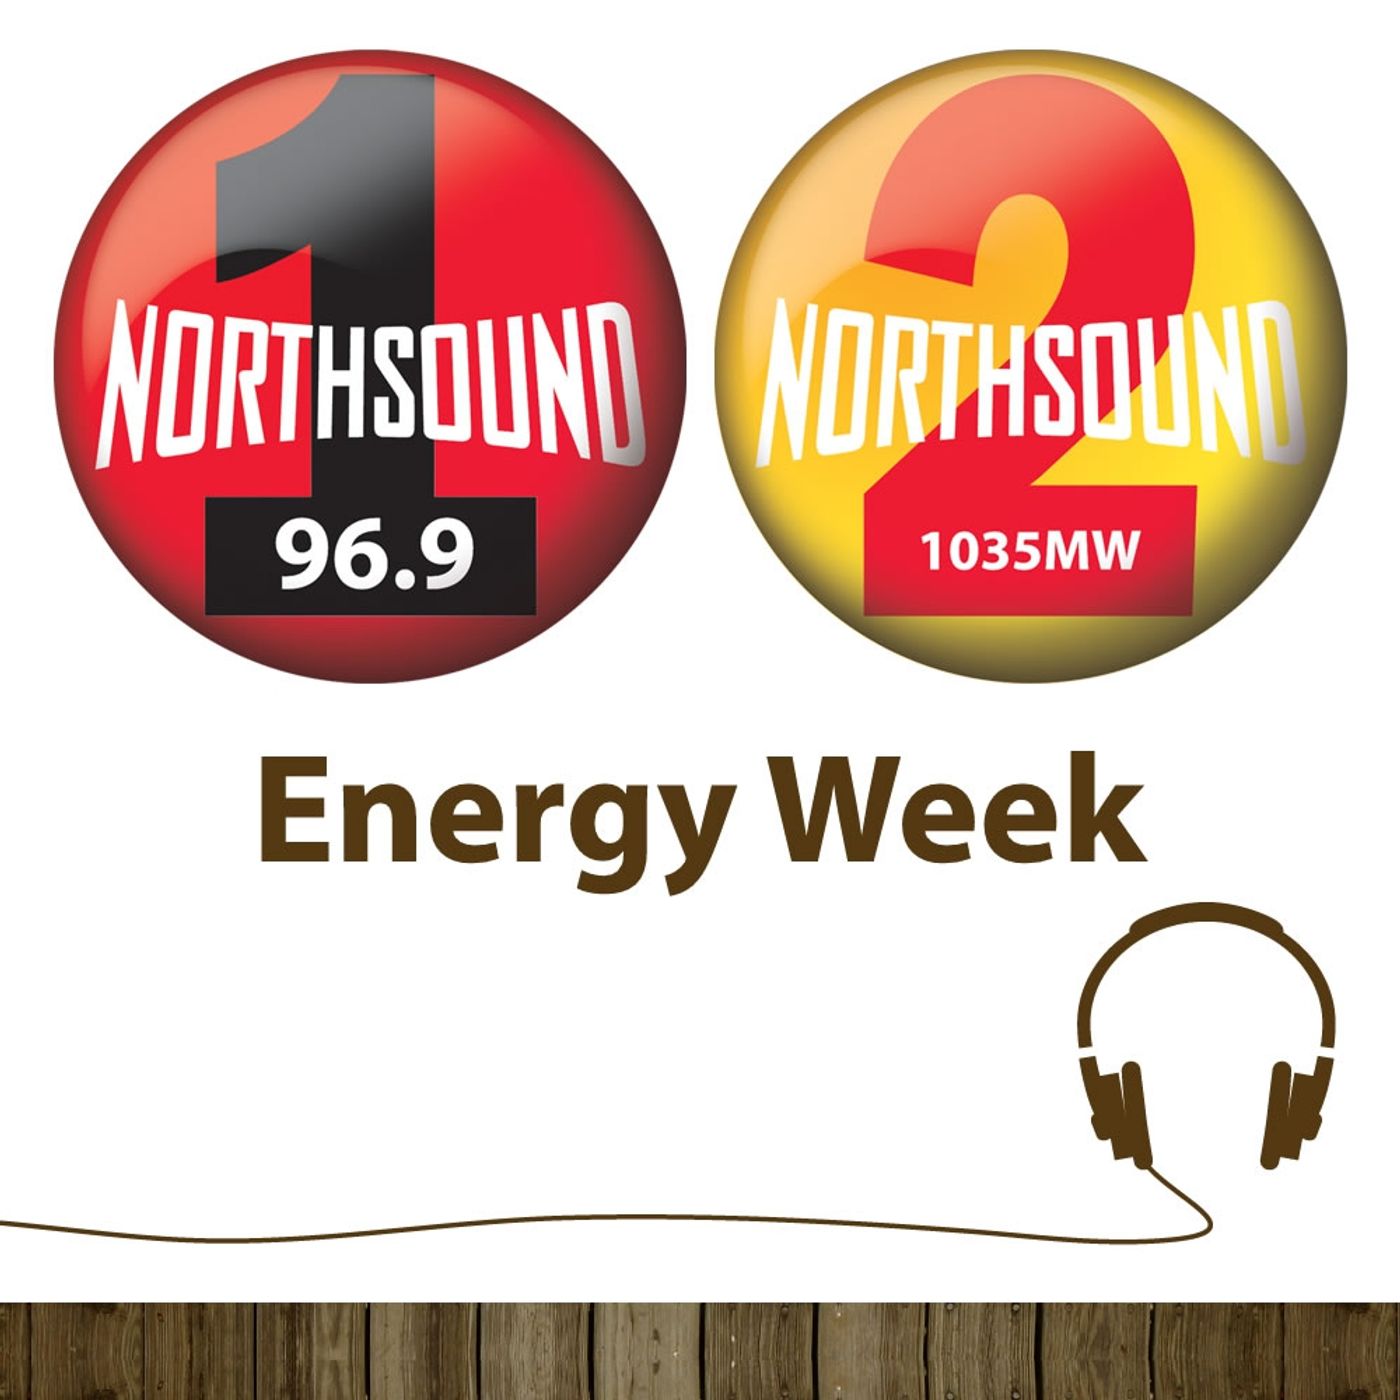 Northsound Energy Week 7.2.14